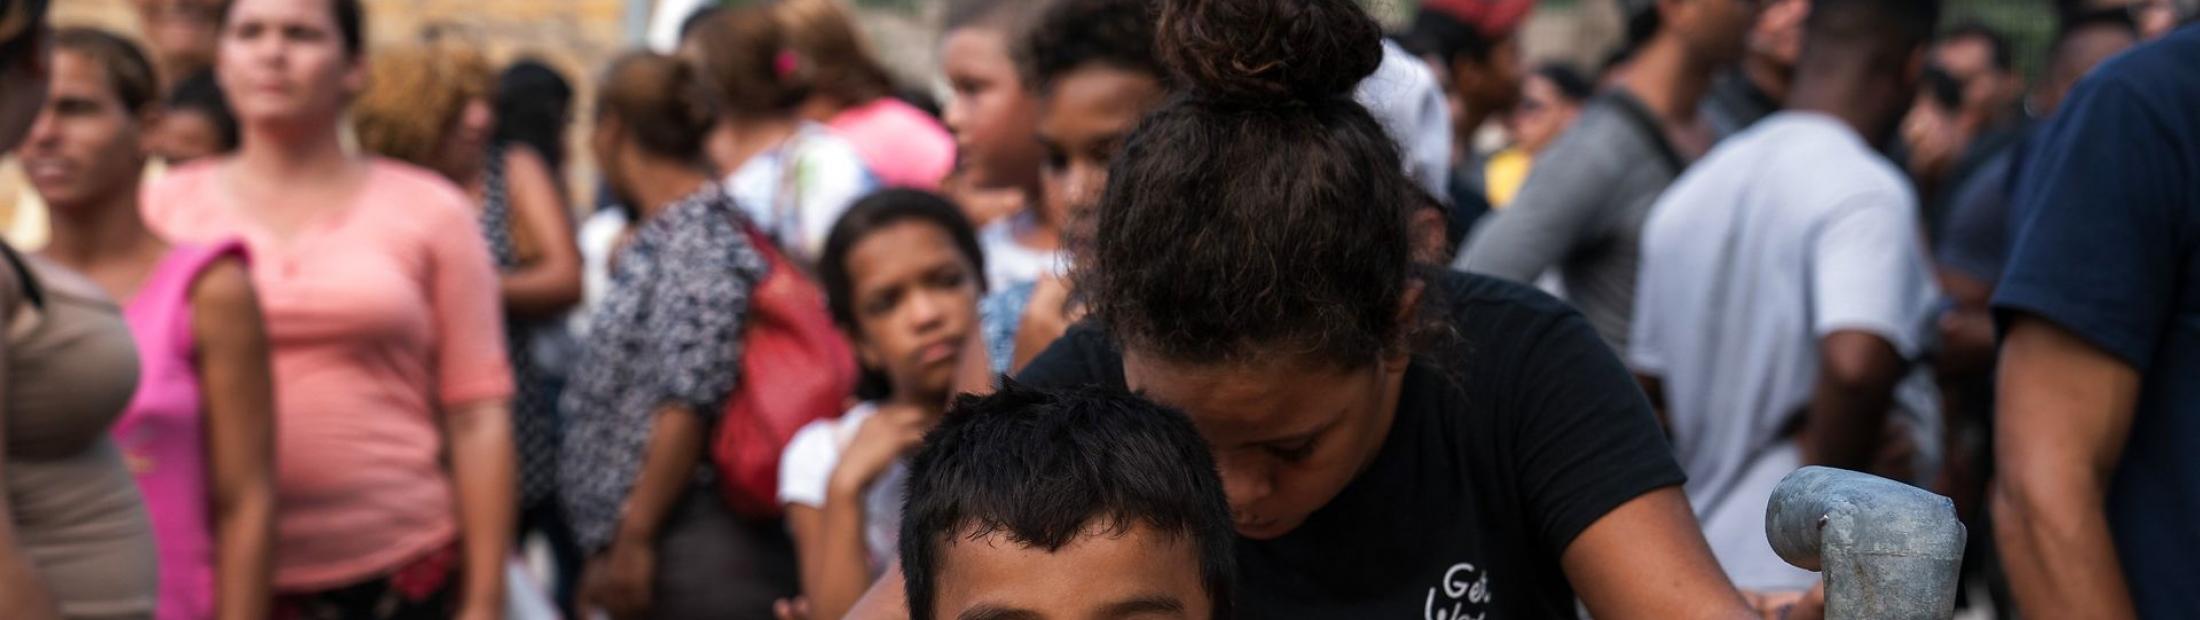 Emergencia en Centroamérica: miles de personas obligadas a huir